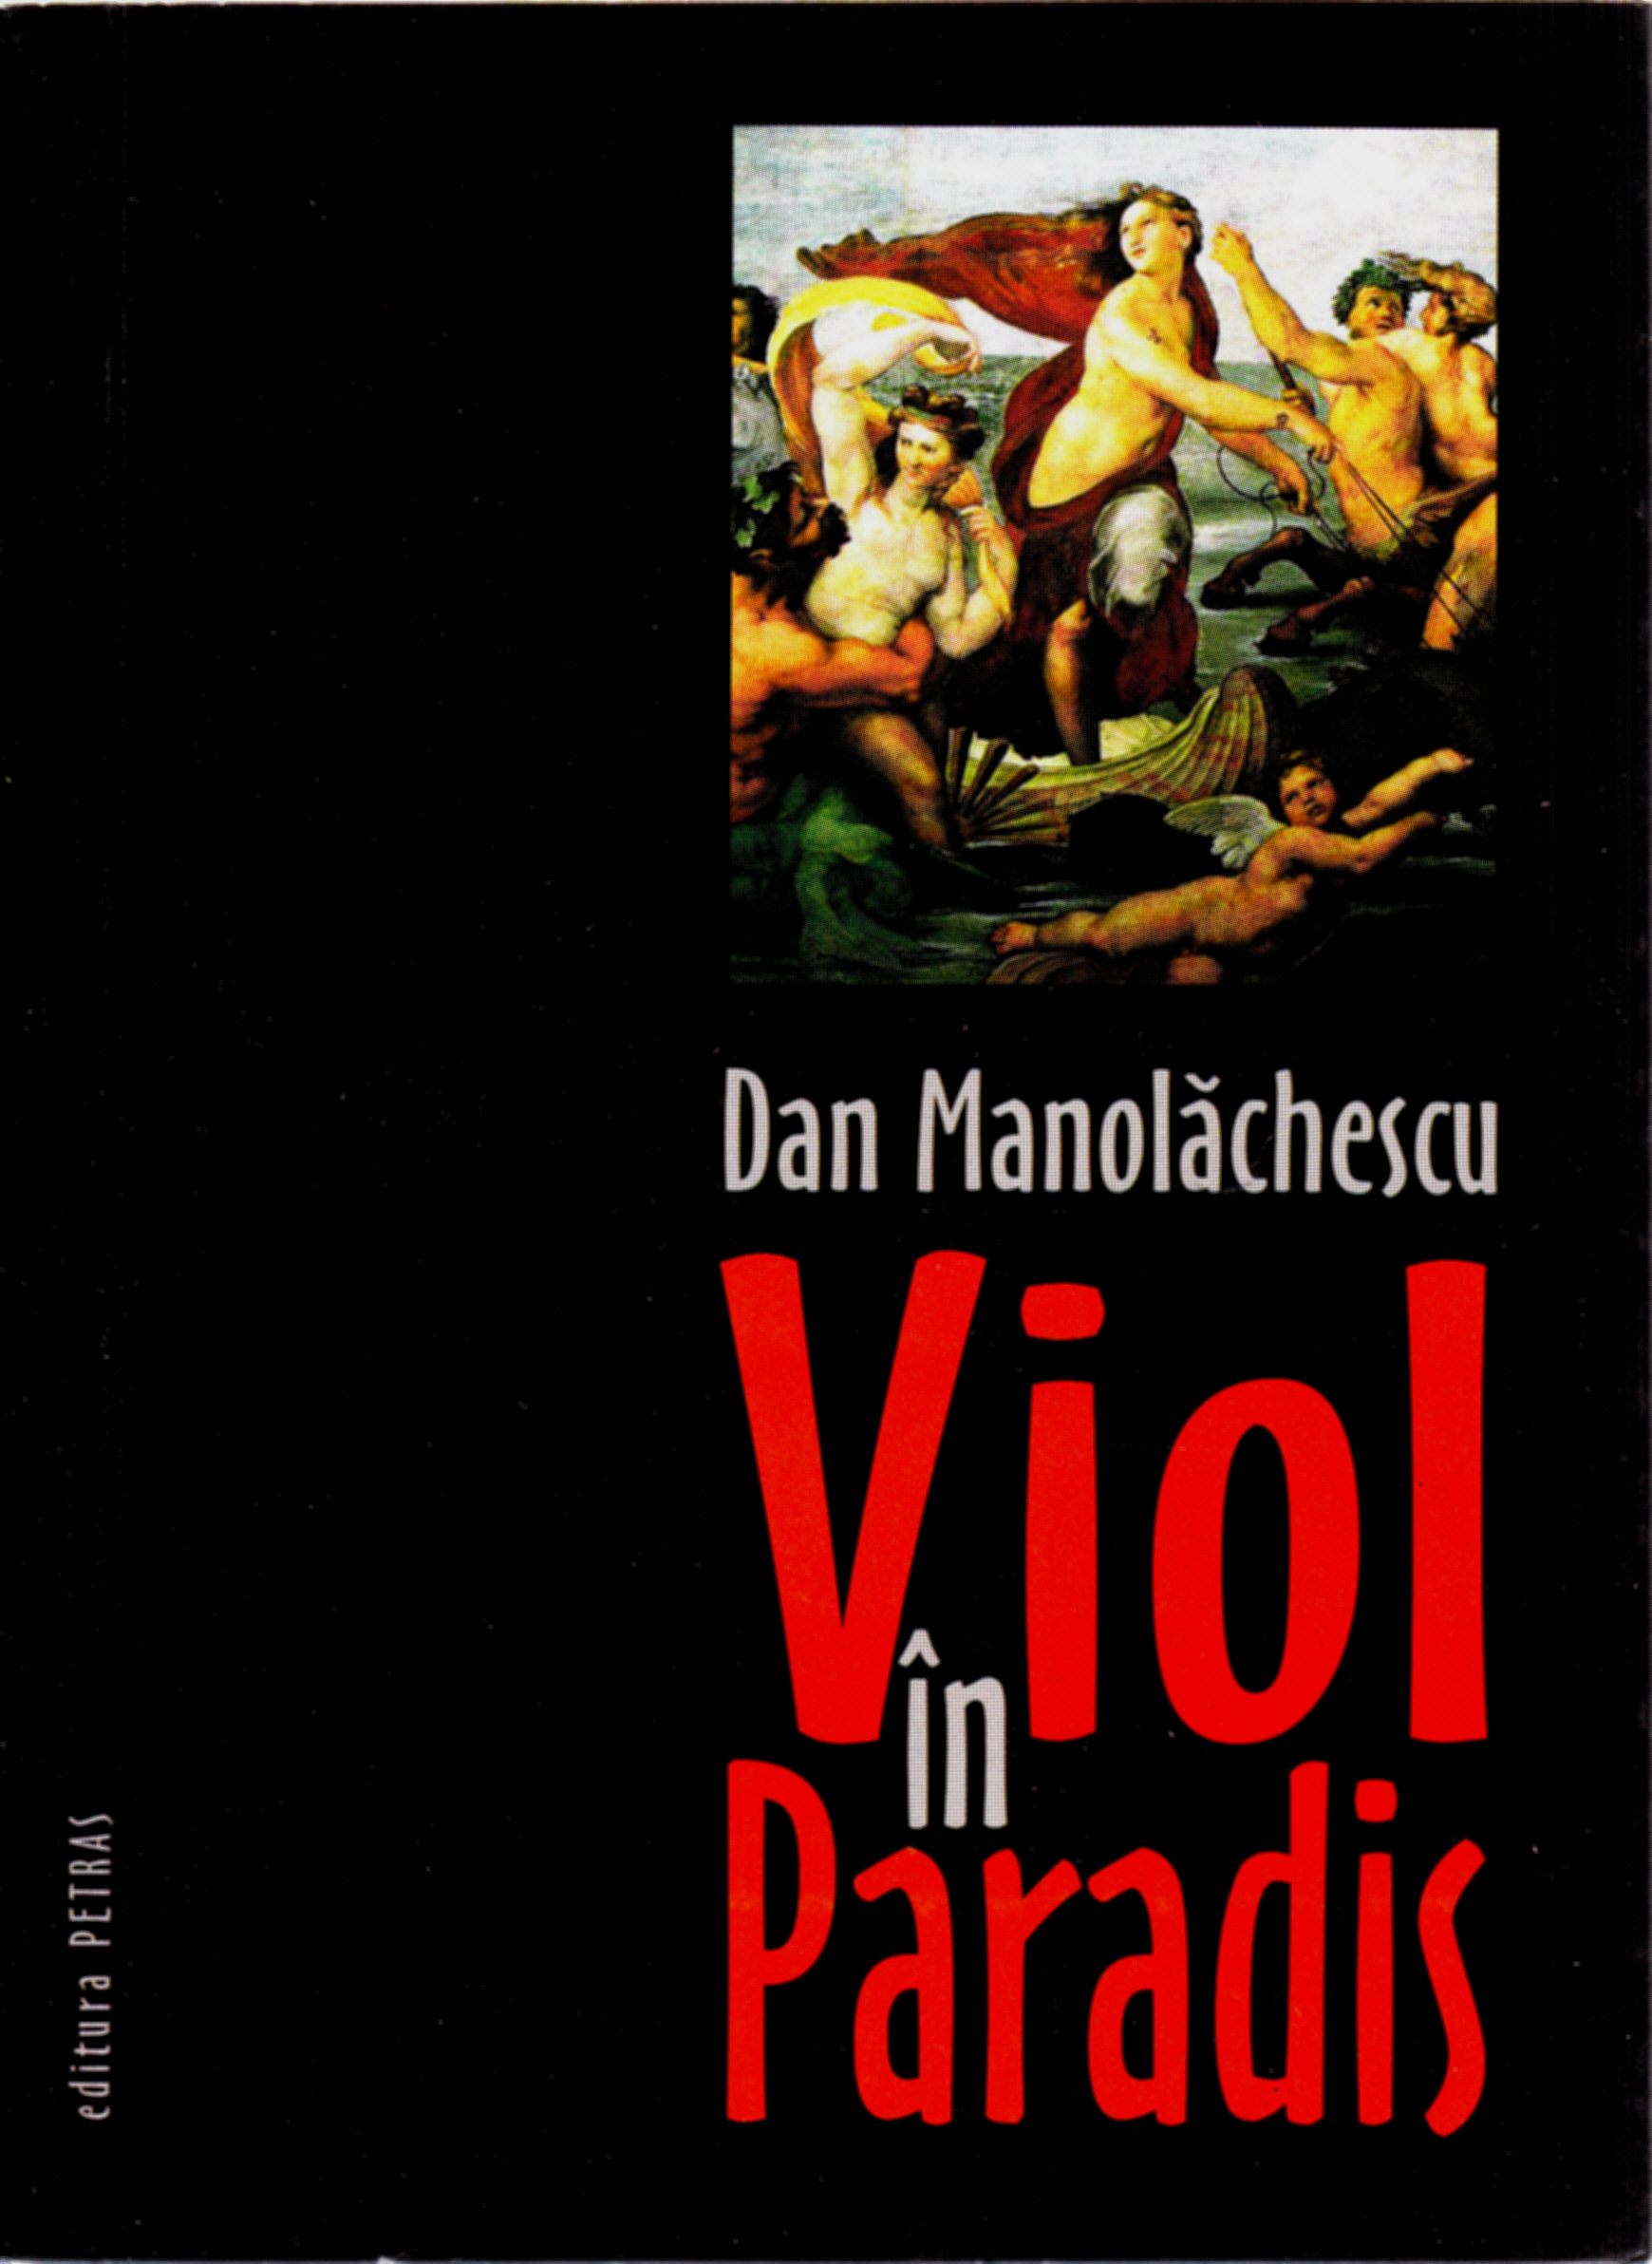 Viol in paradis - Dan Manolachescu